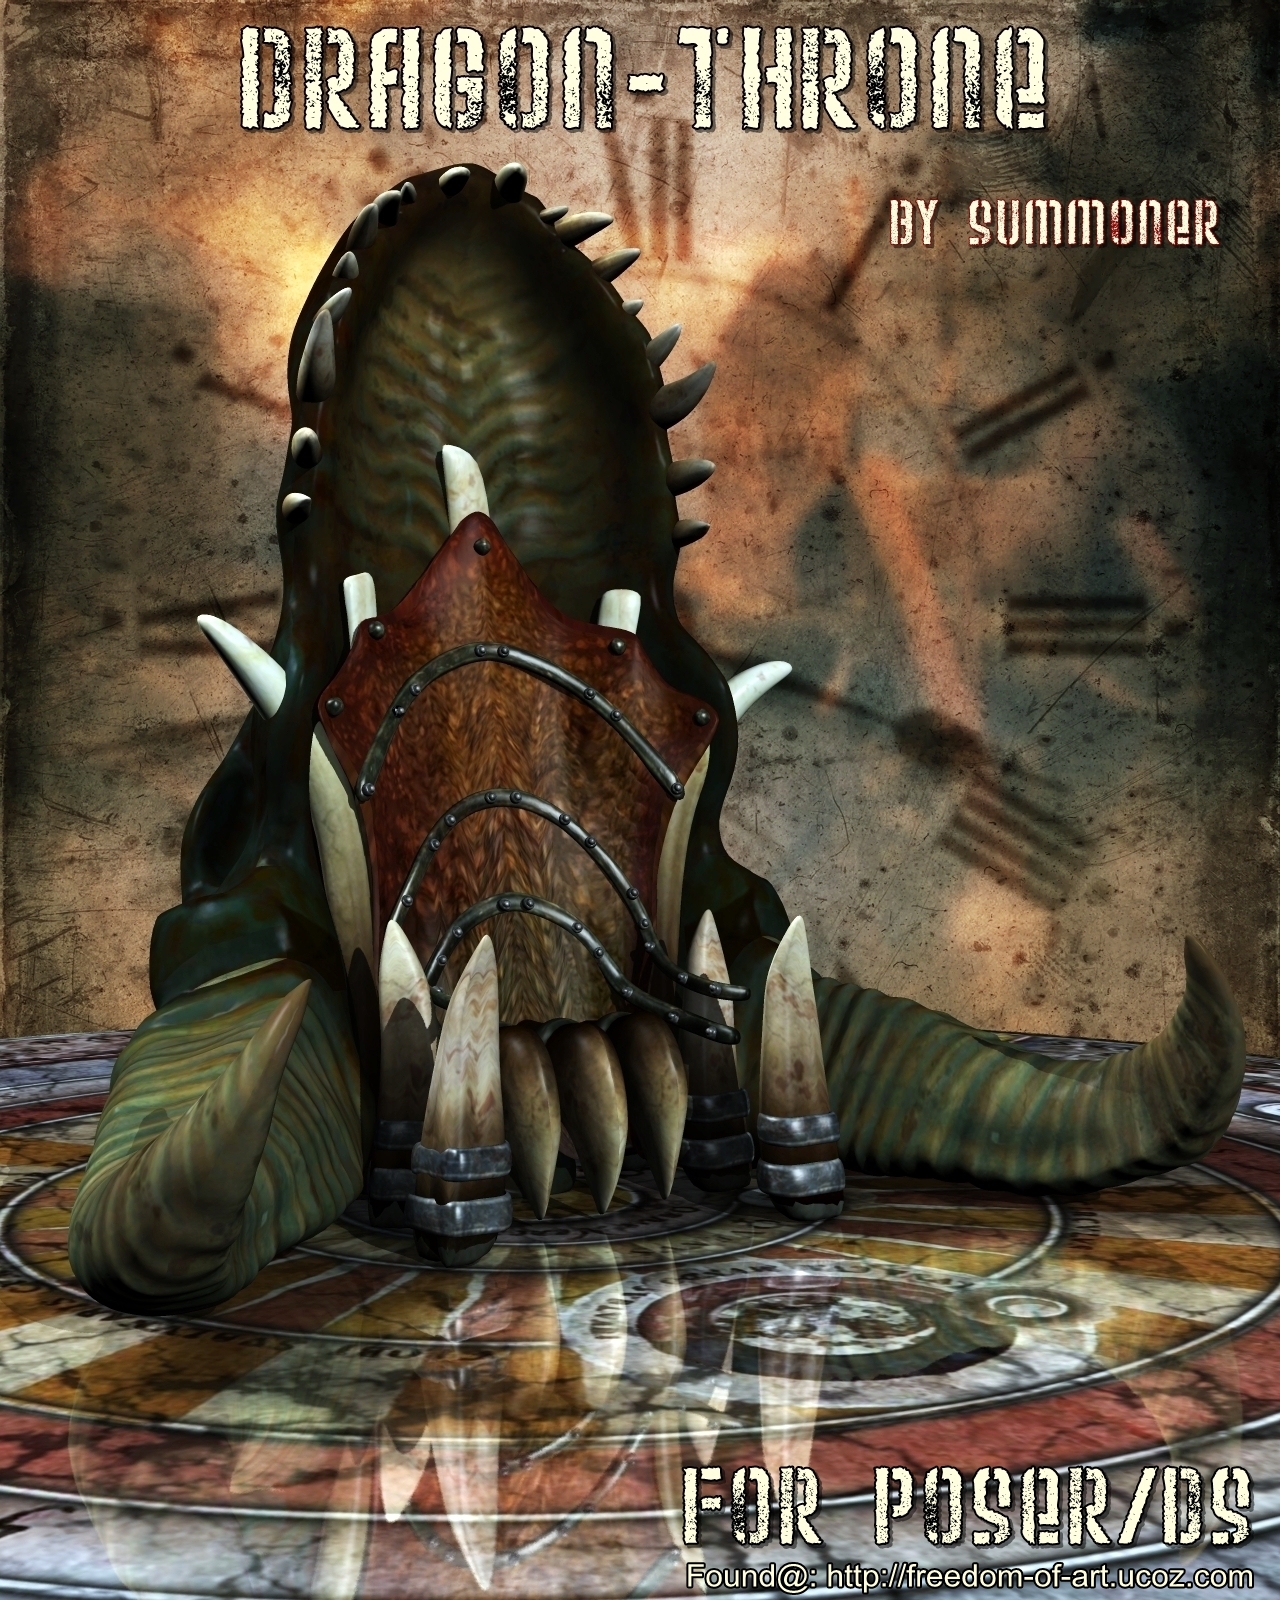 Summoner's Dragon-Throne